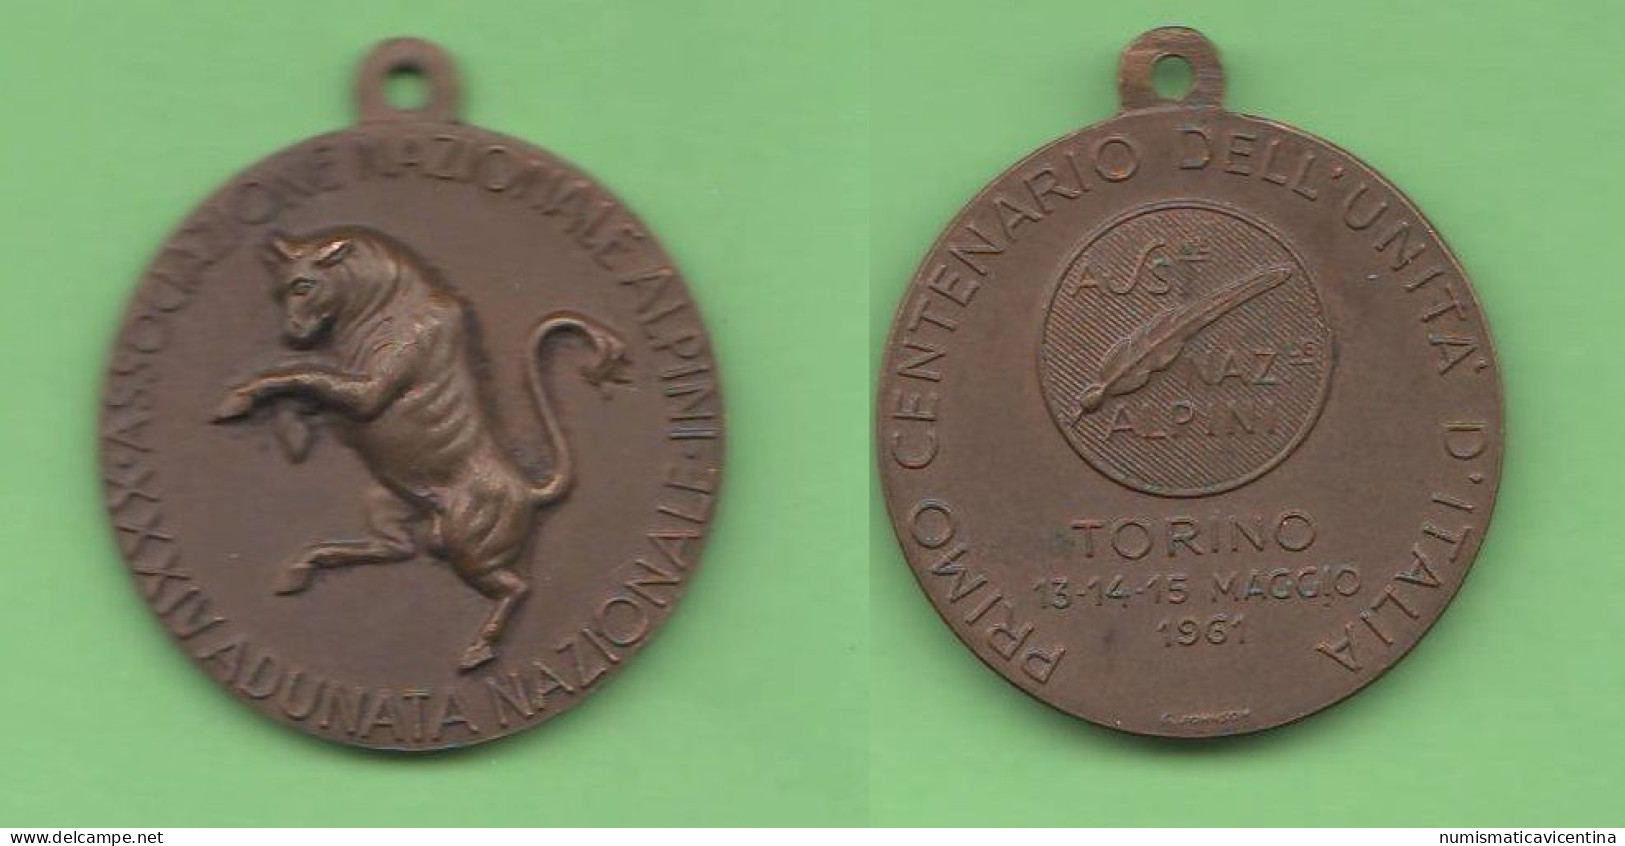 Torino Medaglia Adunata Nazionale Alpini 1961 ANA Marcata Johnson - Italy